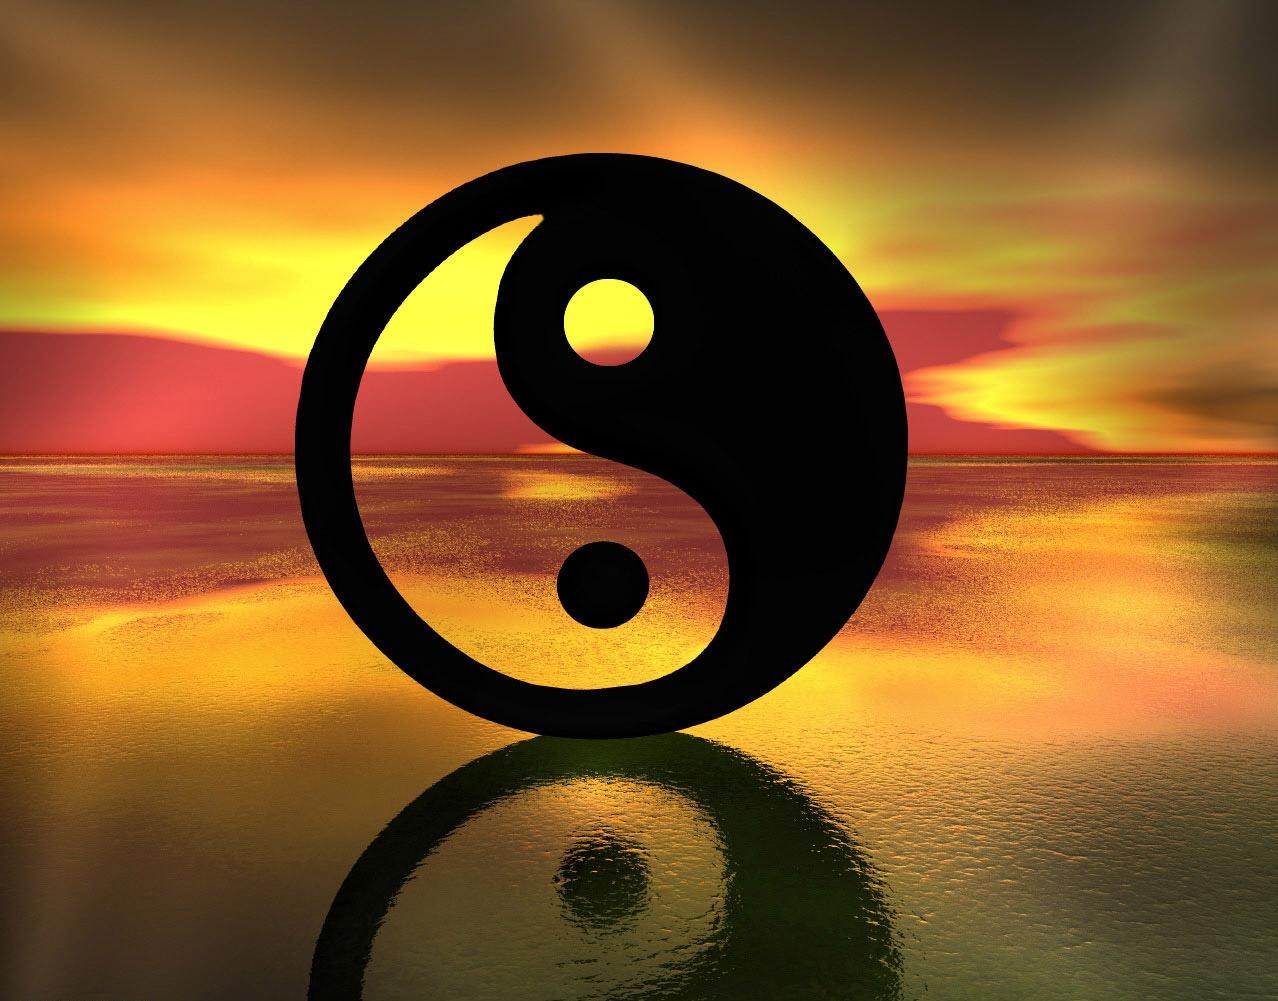 description of yin and yang